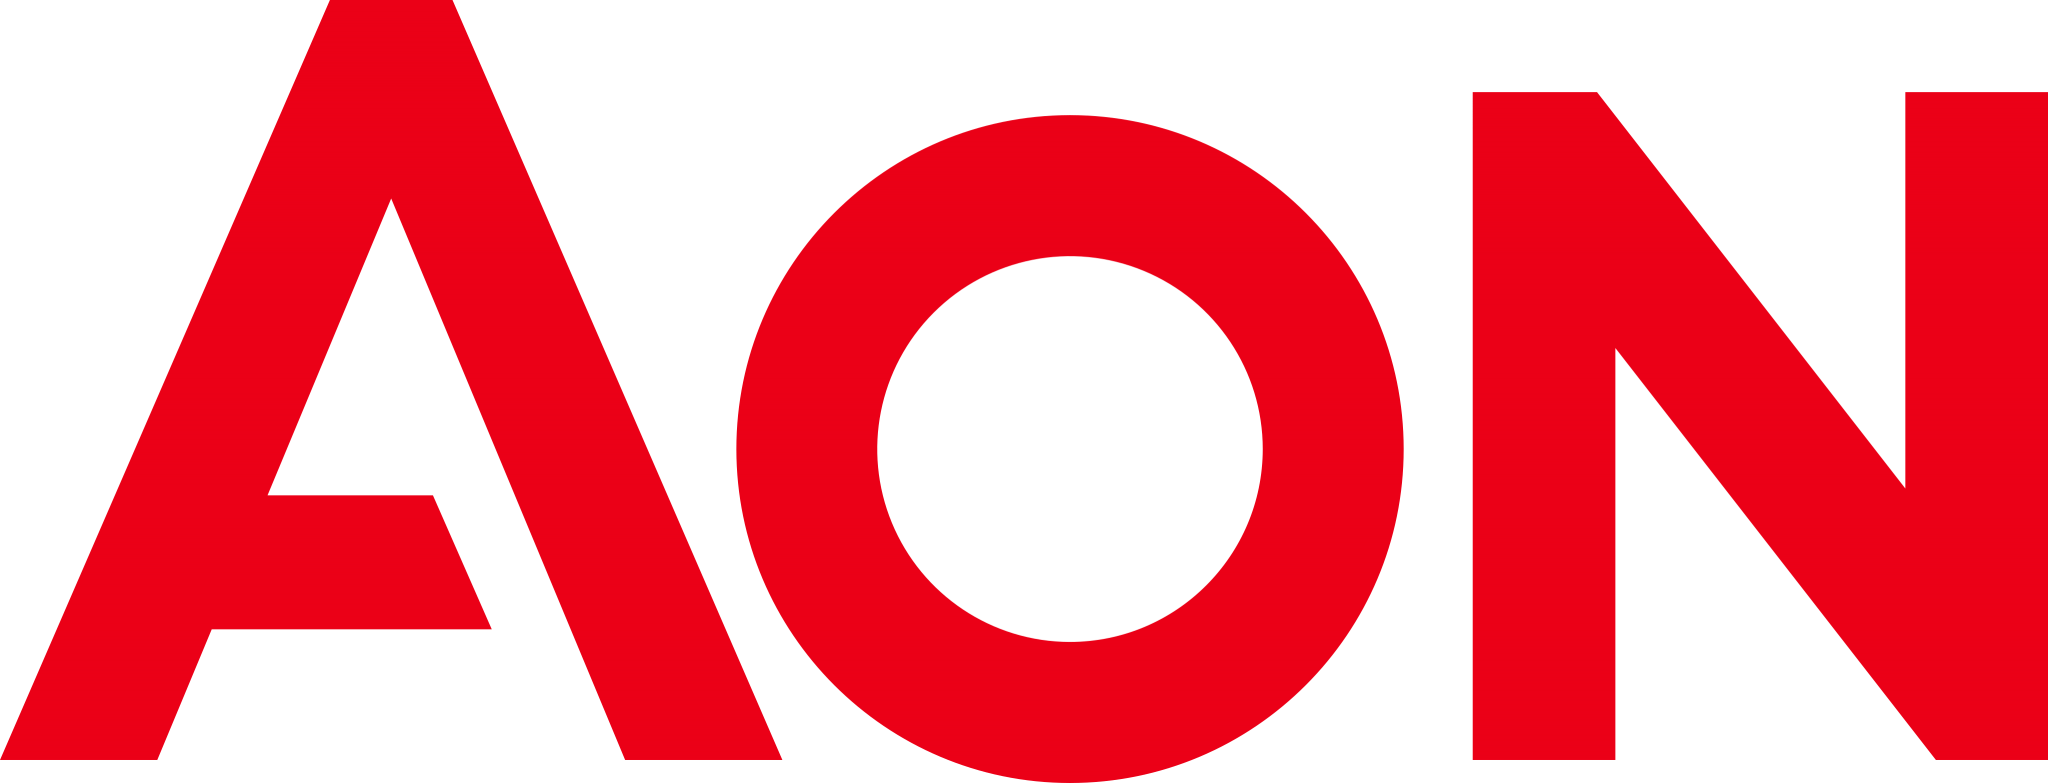 Aon svg Logo Download Logotipos PNG e Vetor